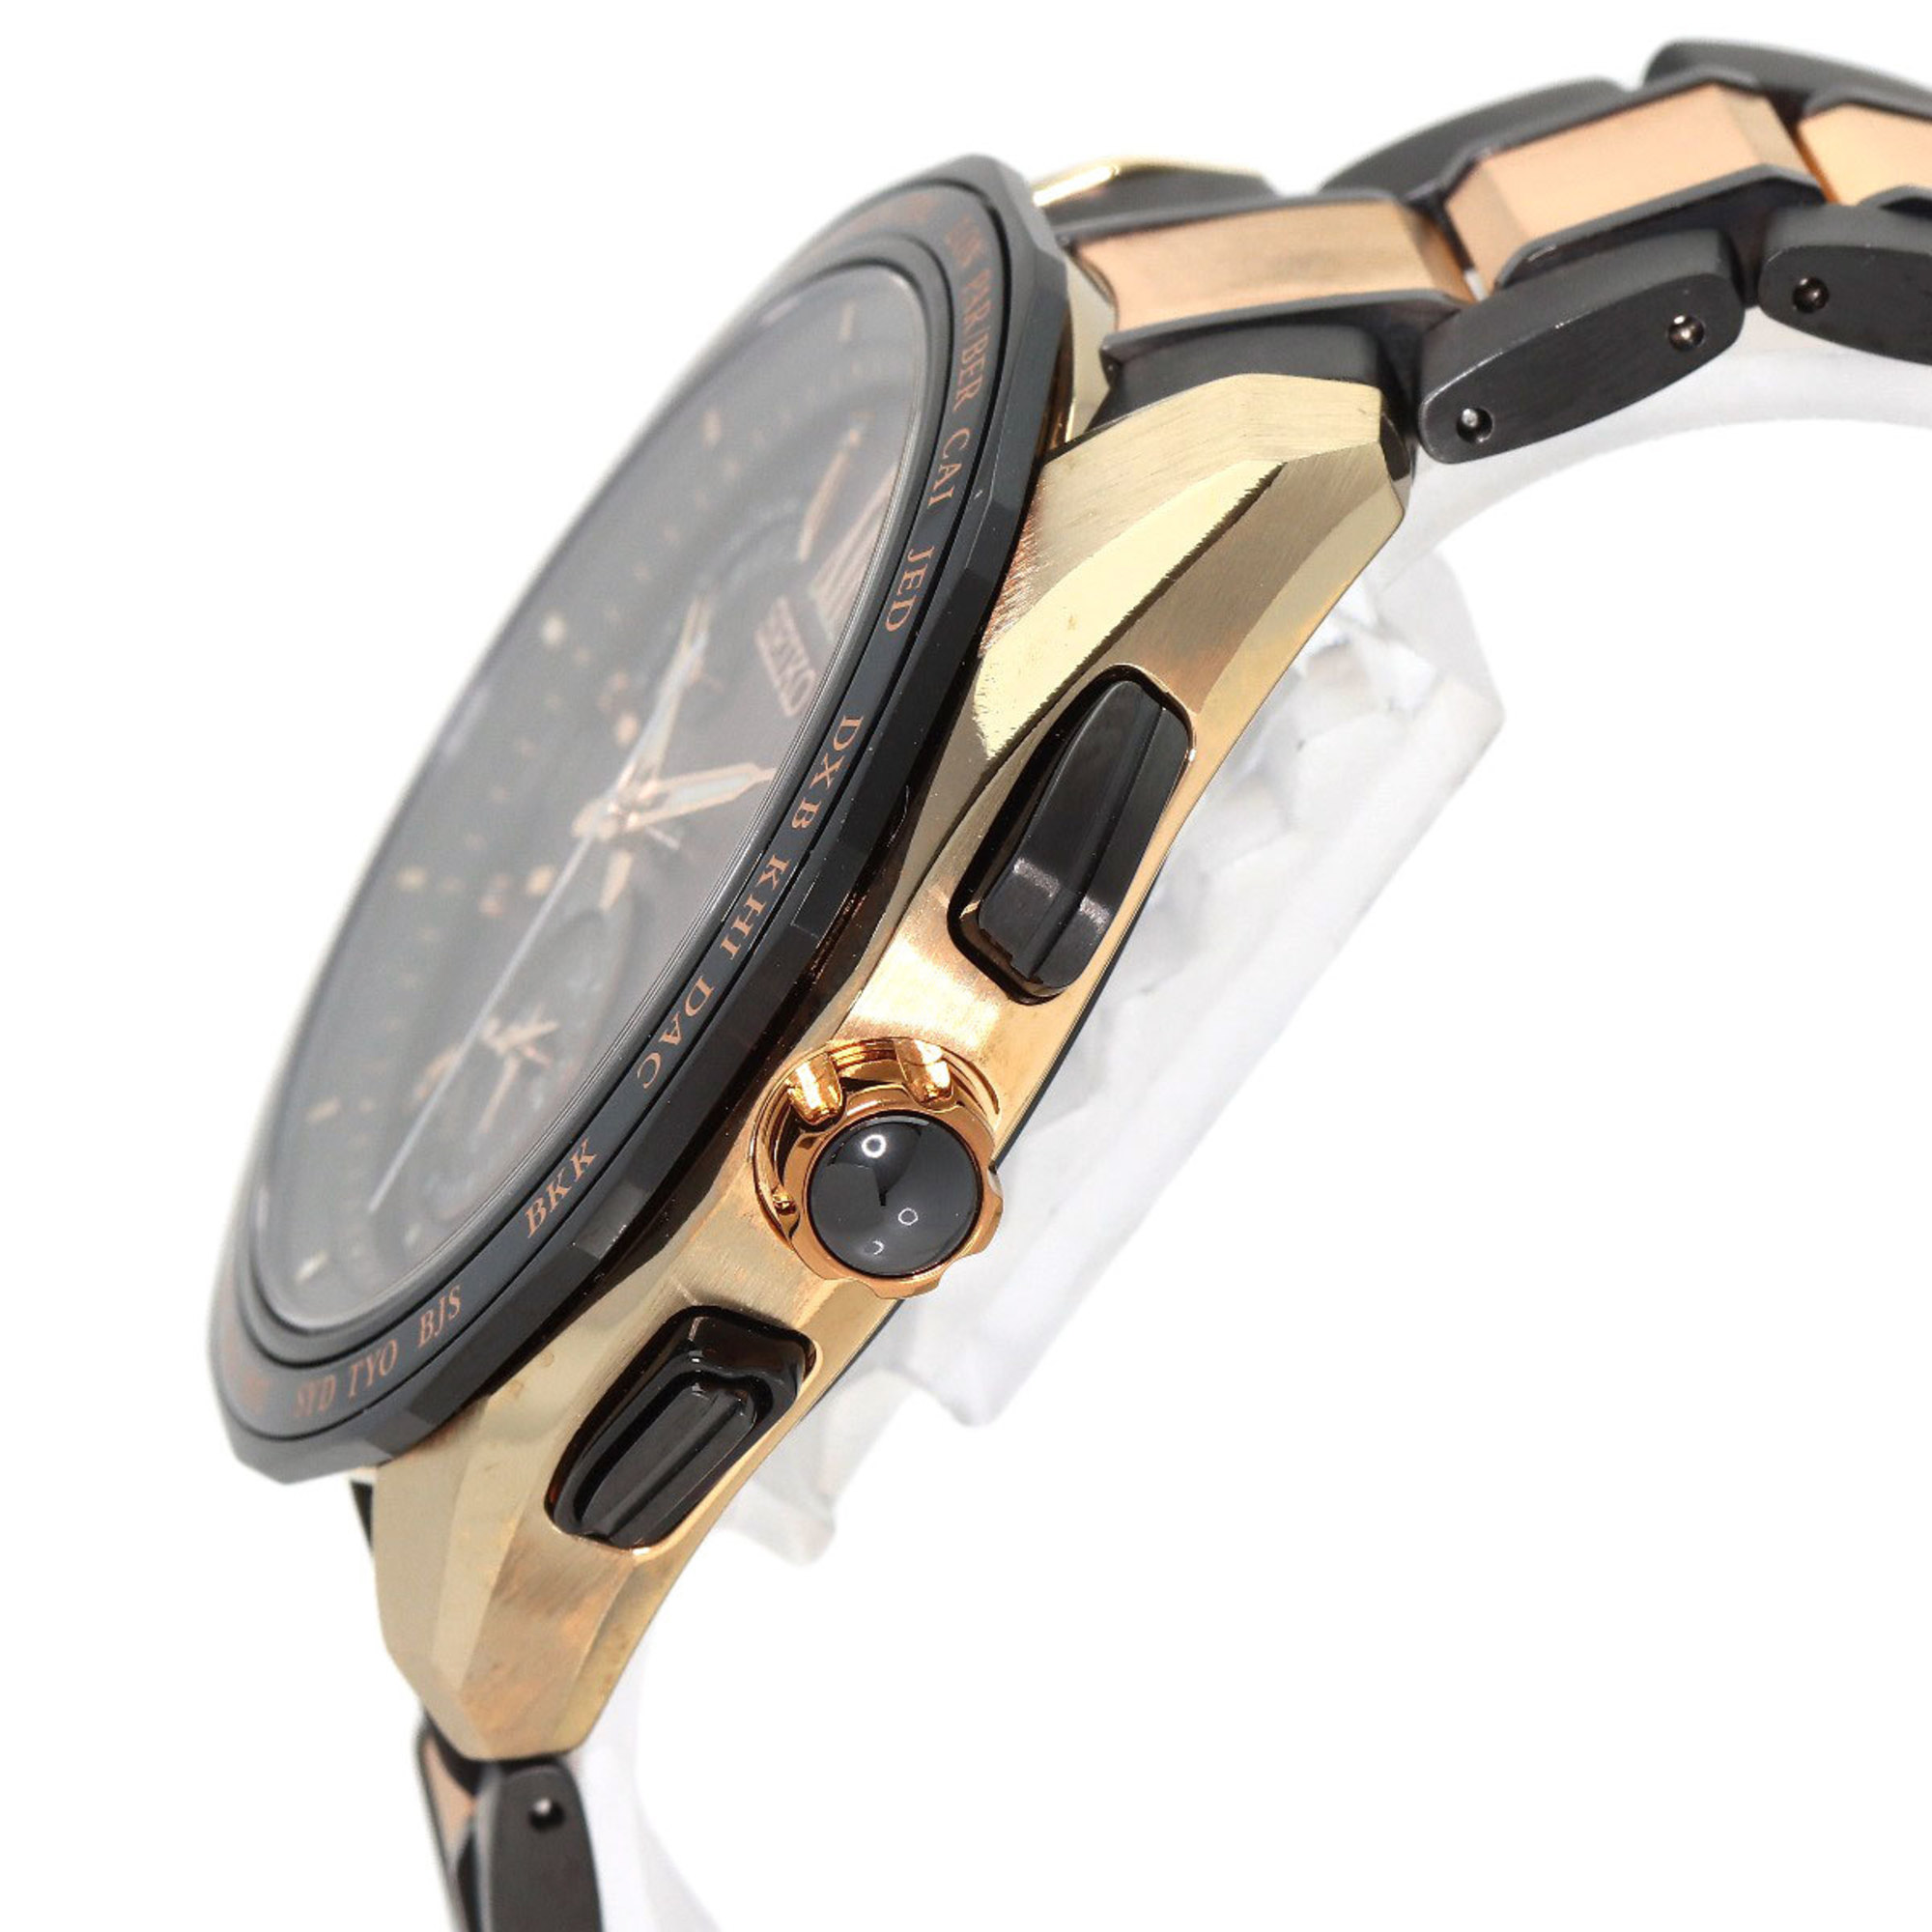 Seiko SAGA254 8B63-0AR0 Brightz Flight Expert 800 Limited Watch Titanium Ceramic Men's SEIKO